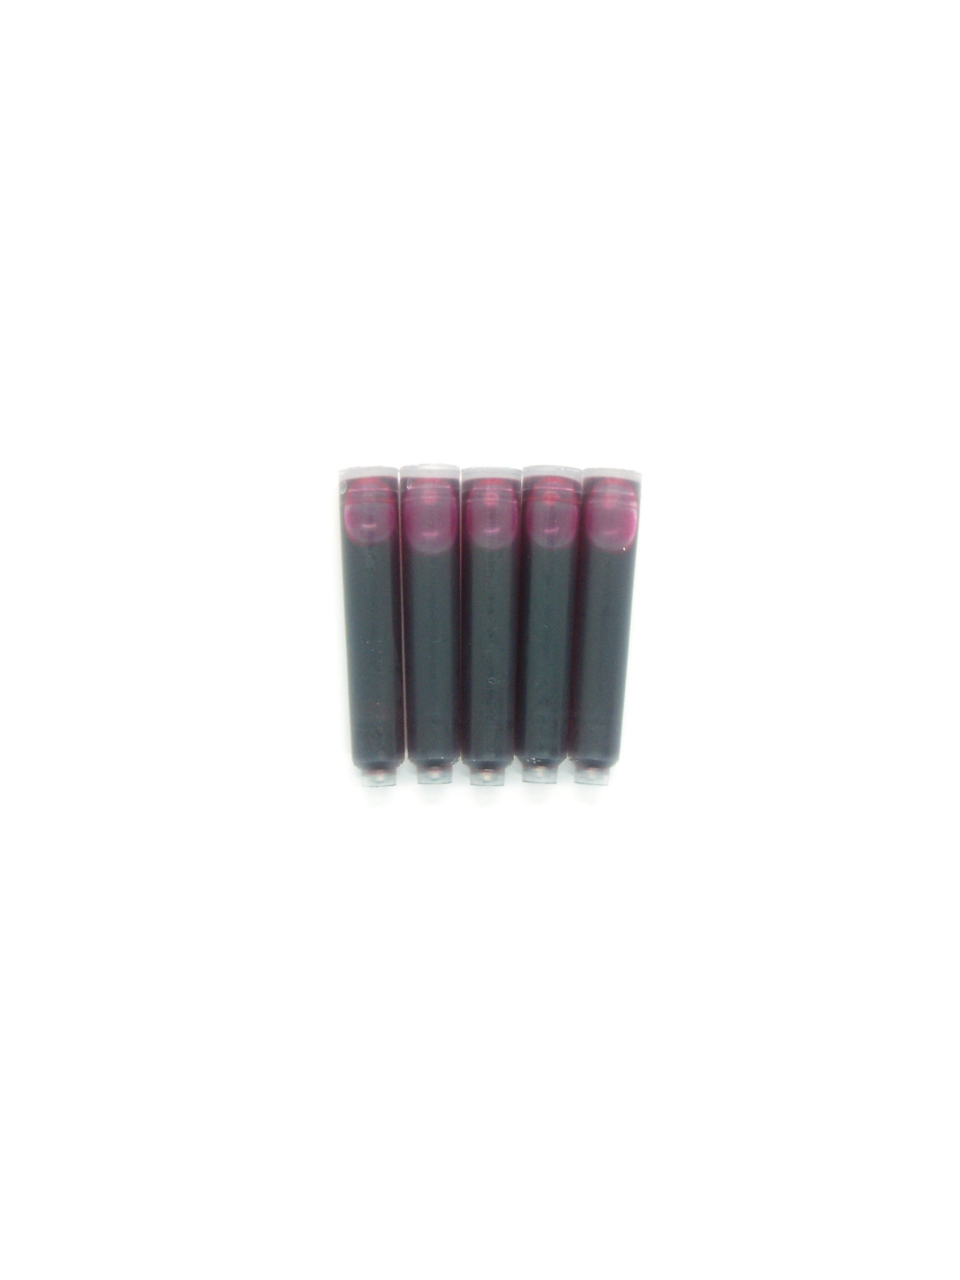 PenConverter Ink Cartridges For Fuliwen Fountain Pens (Pink)